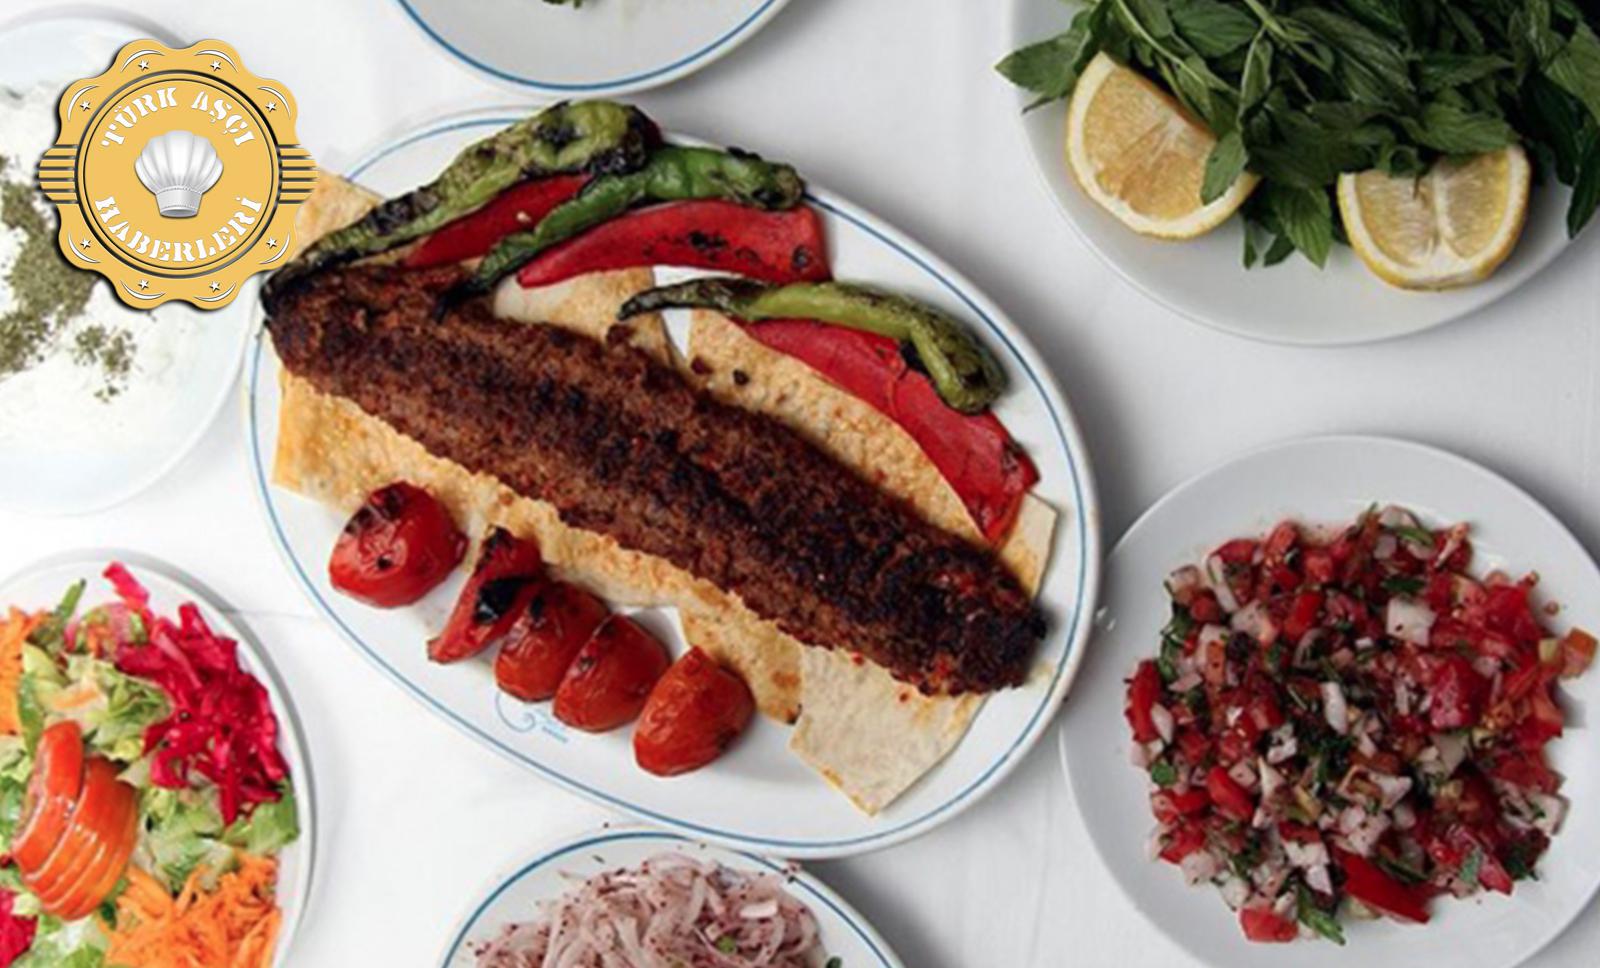 Adana ‘da lezzet festivali düzenlenecek